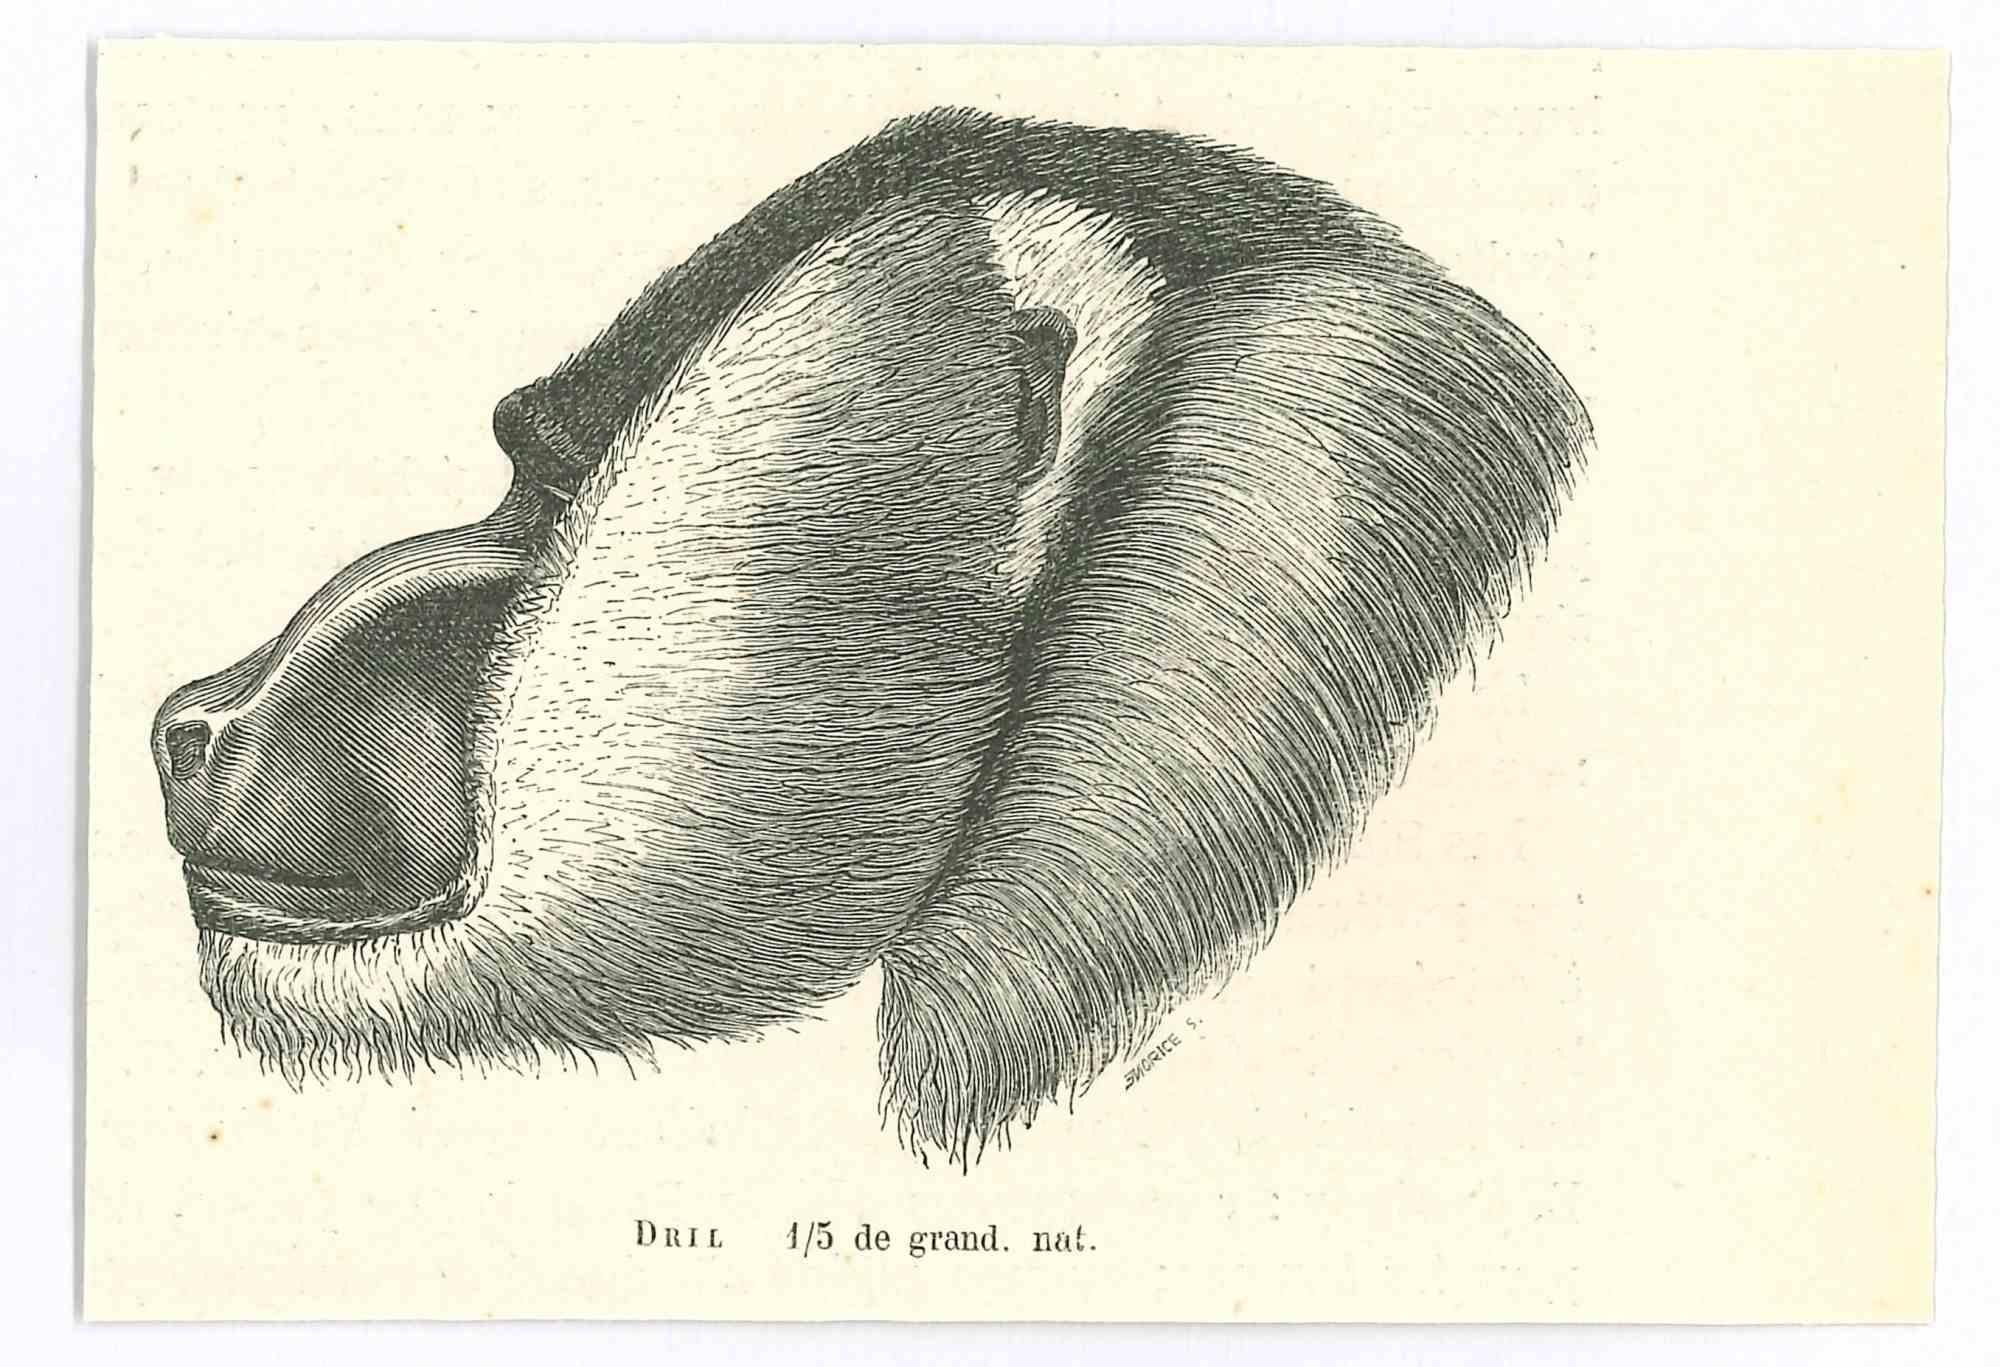 Paul Gervais  Figurative Print – The Monkey – Originallithographie von Paul Gervais, 1854